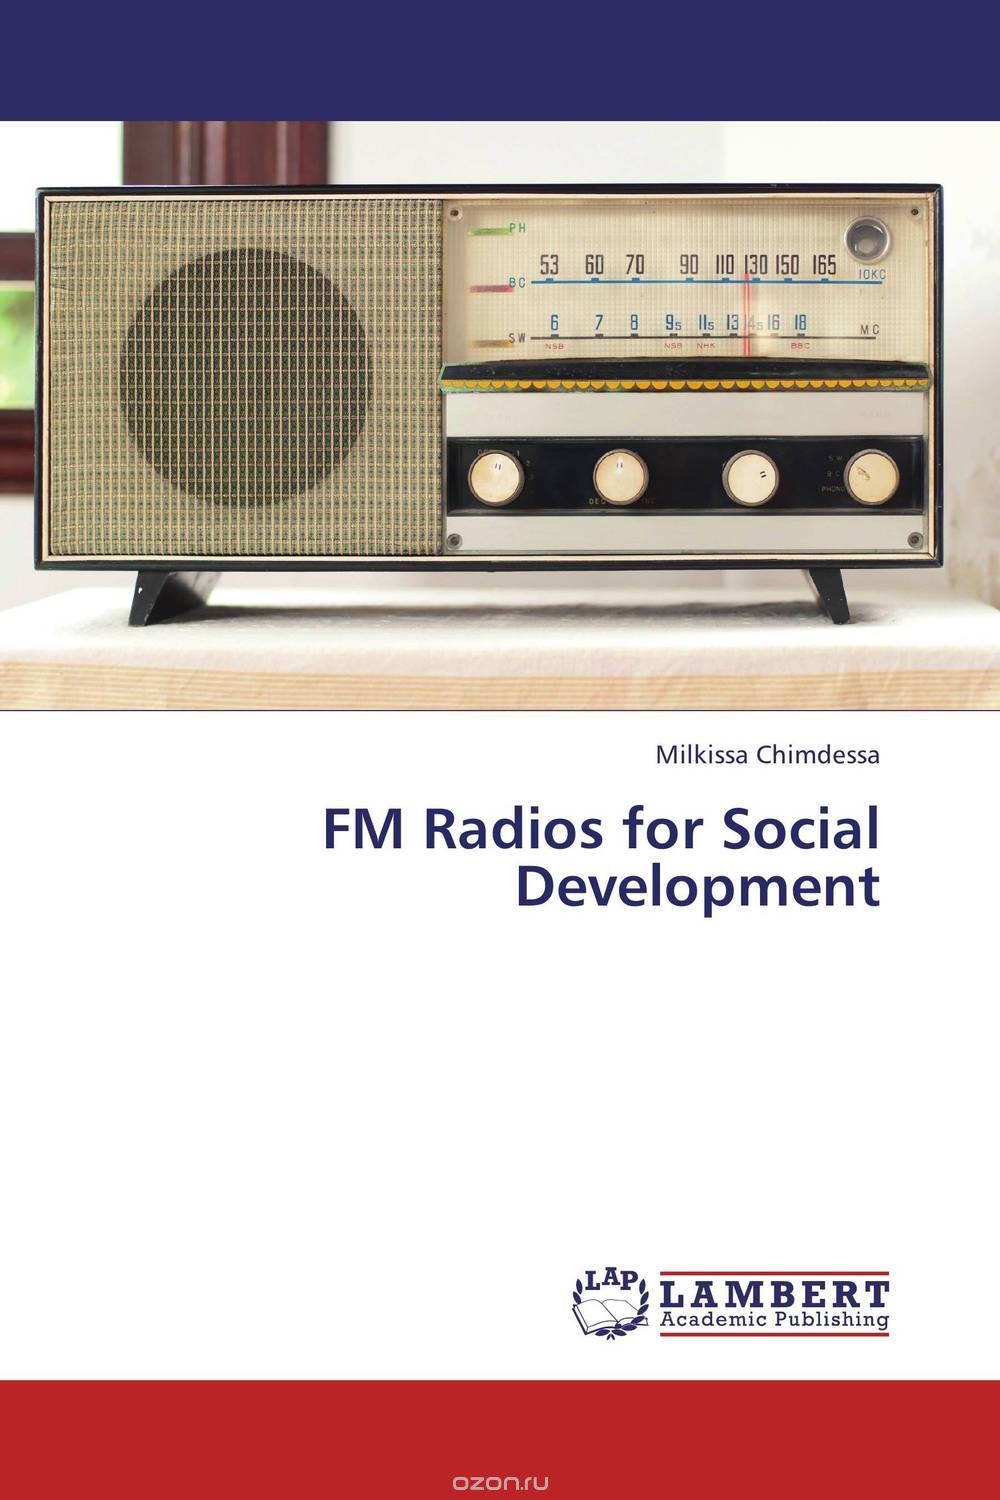 FM Radios for Social Development